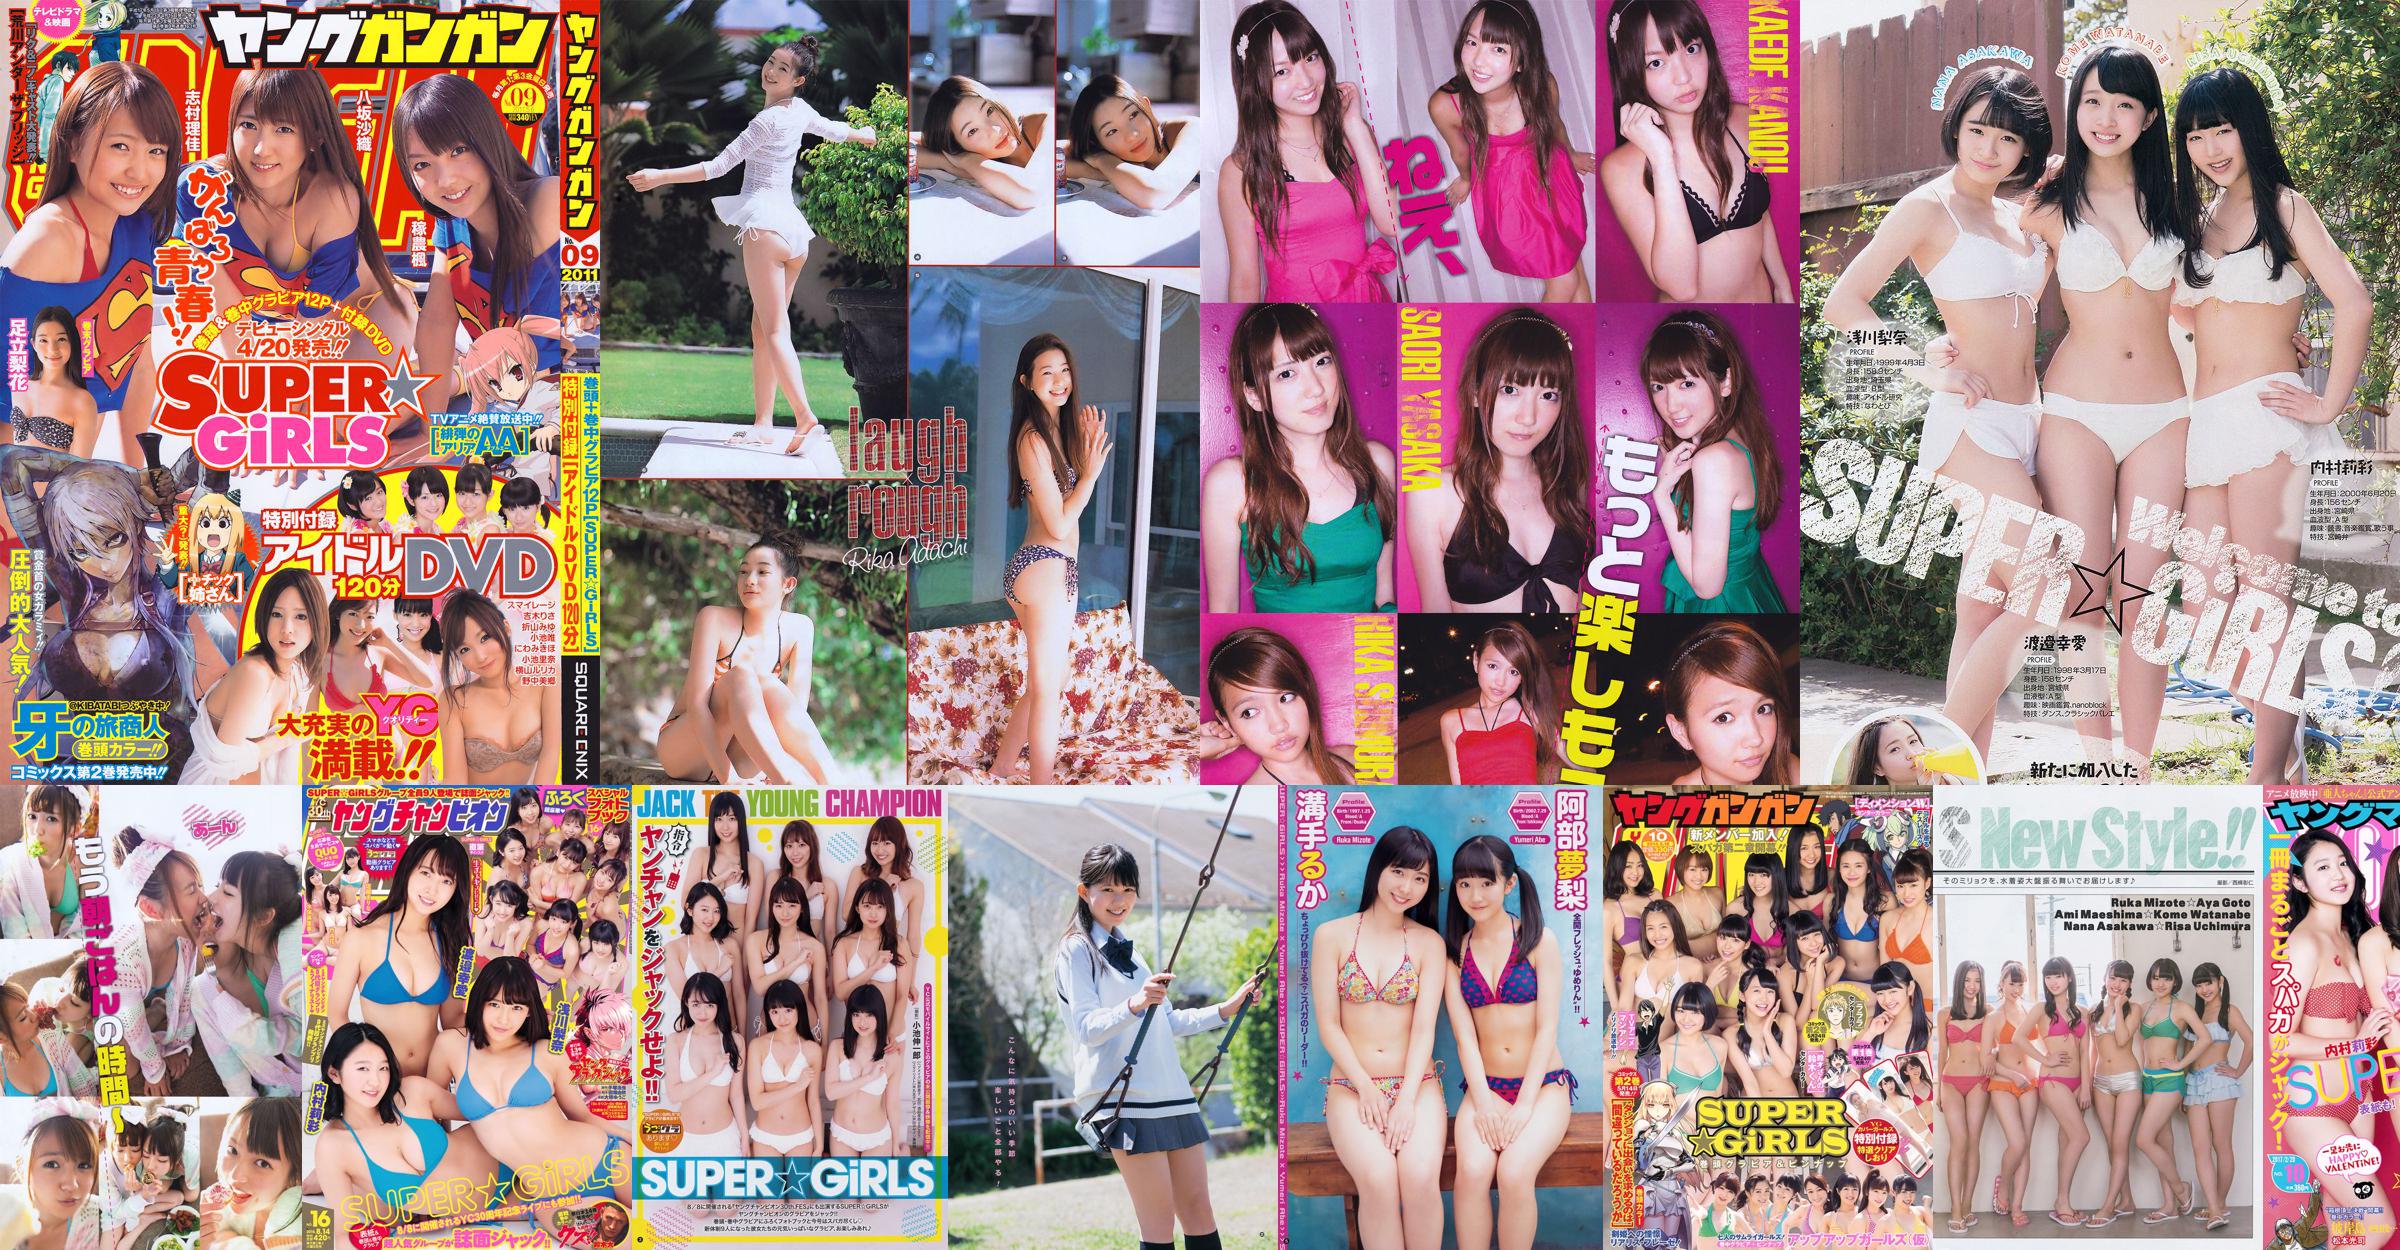 [Young Gangan] SUPER ☆ GiRLS Up Up Girls (Kakko) Ami Yokoyama 2014 No.10 Photograph No.0af069 Page 3